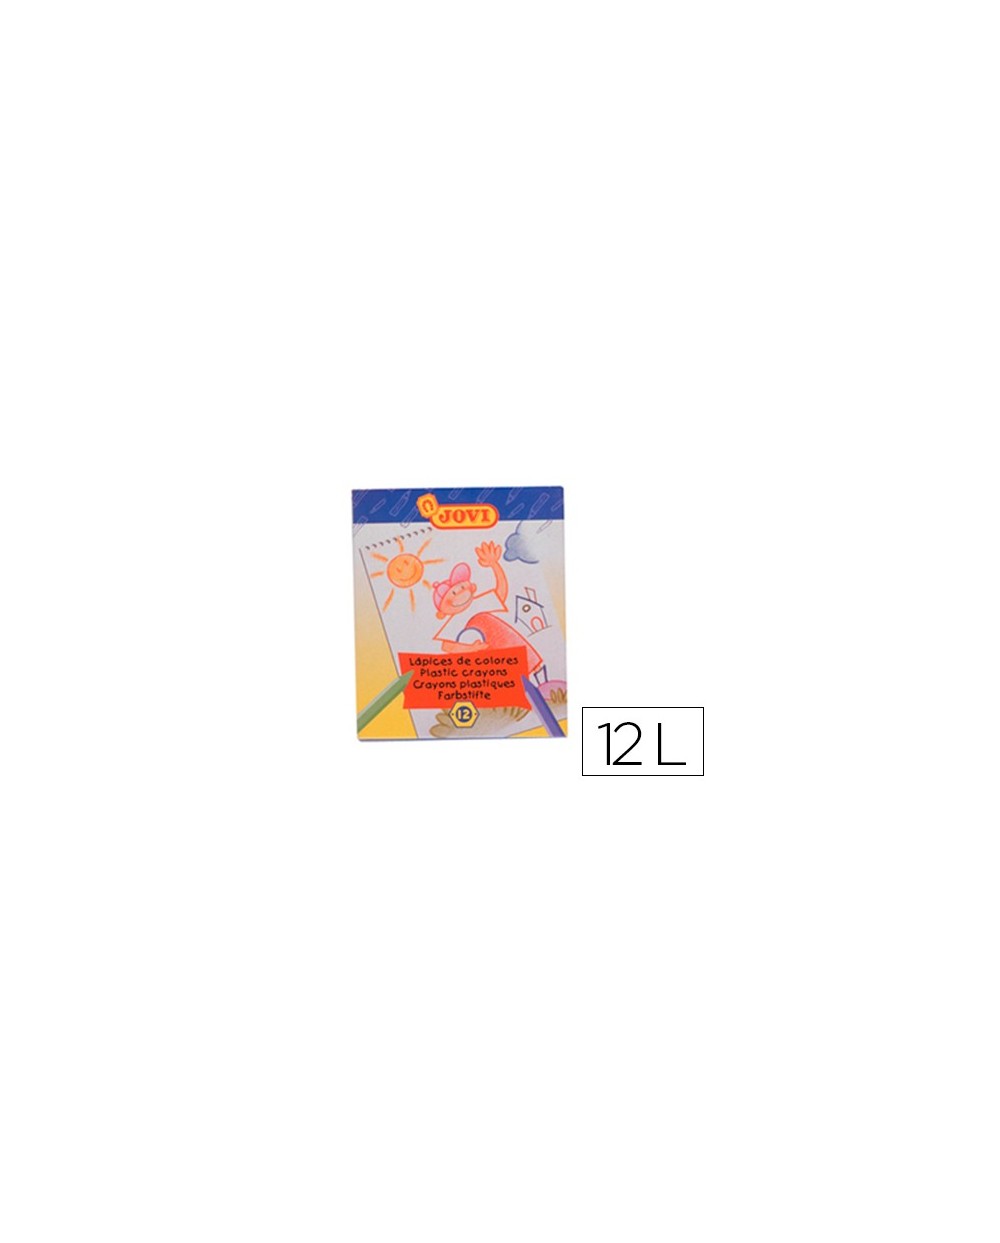 Lapices cera jovi hexagonal caja de 12 colores